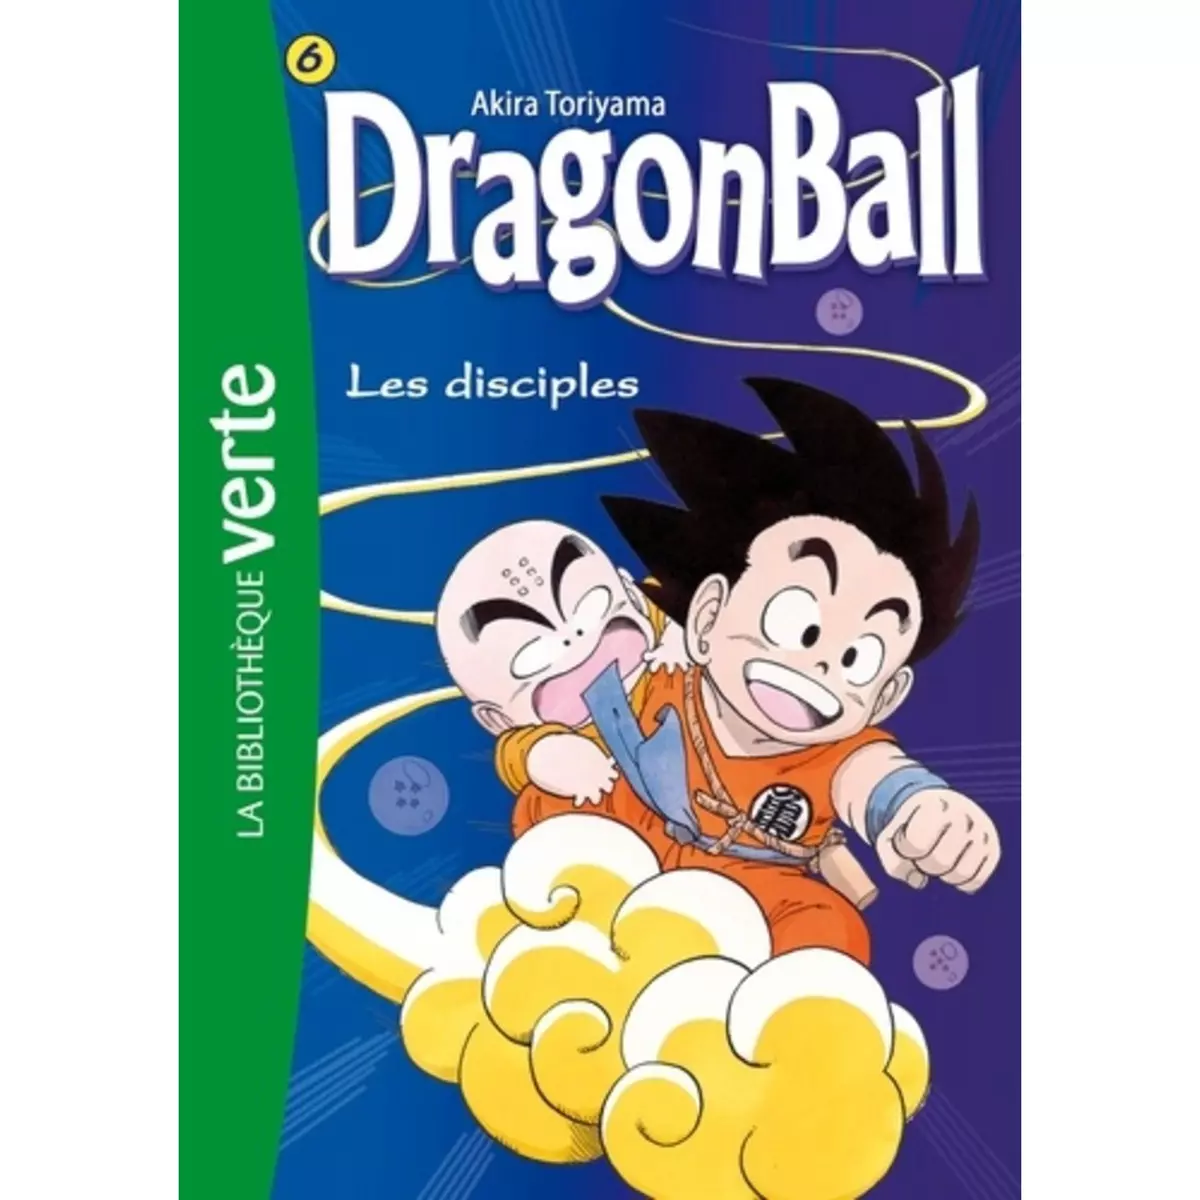  DRAGON BALL TOME 6 : LES DISCIPLES, Toriyama Akira